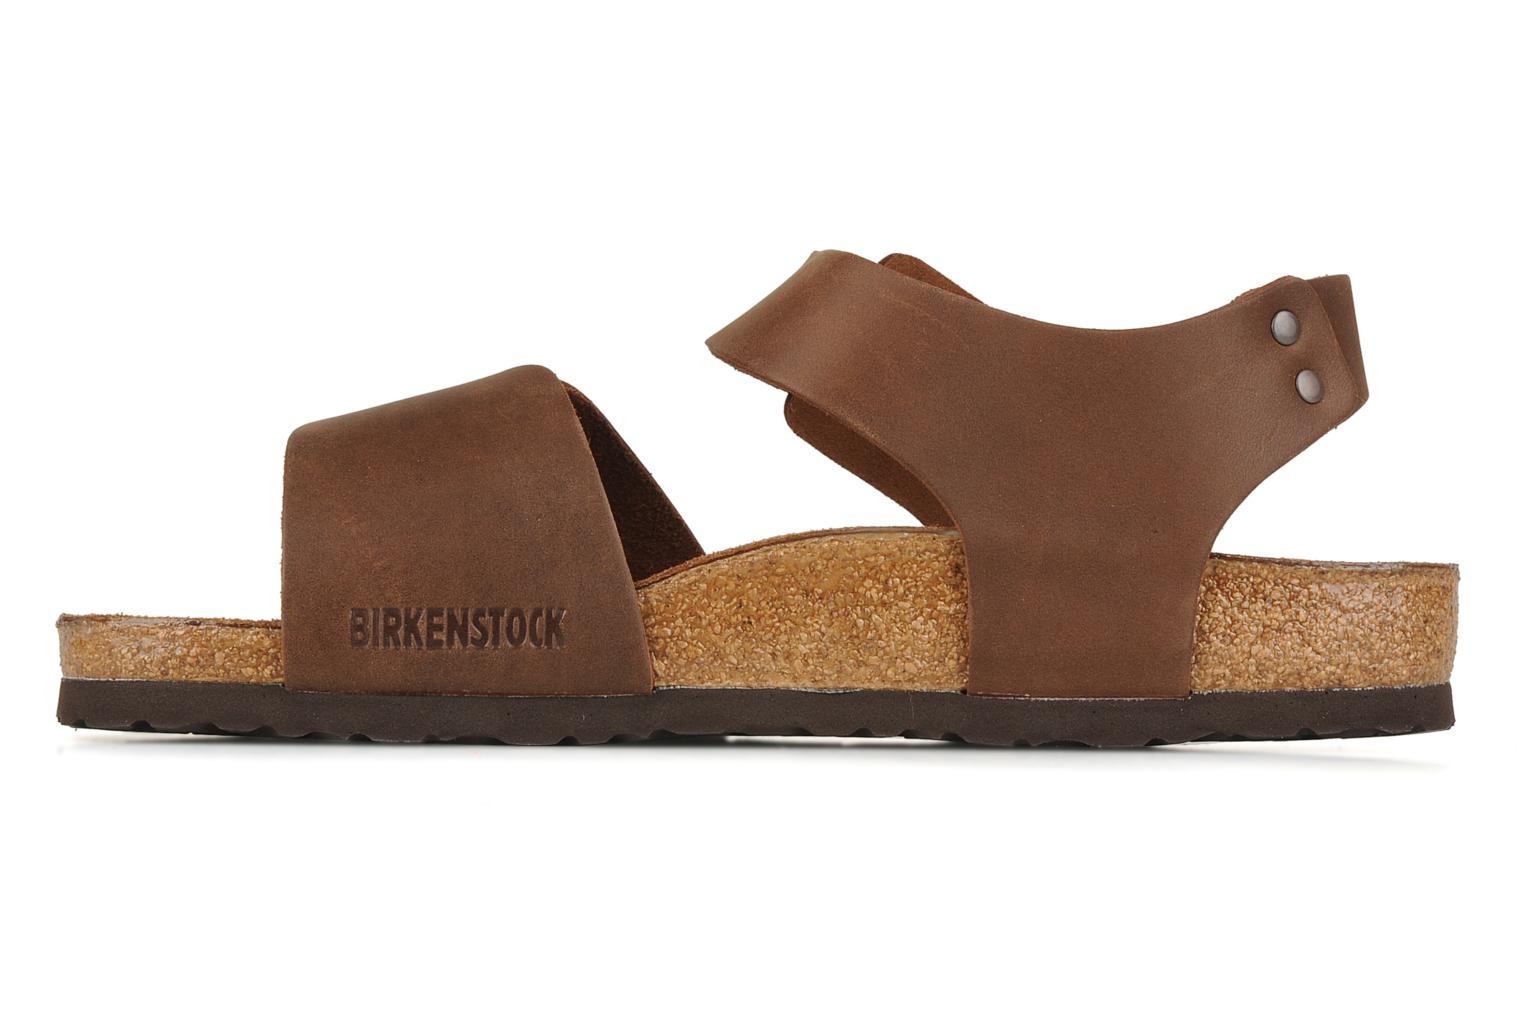 Birkenstock New york cuir m Sandals in Brown at Sarenza (61322)